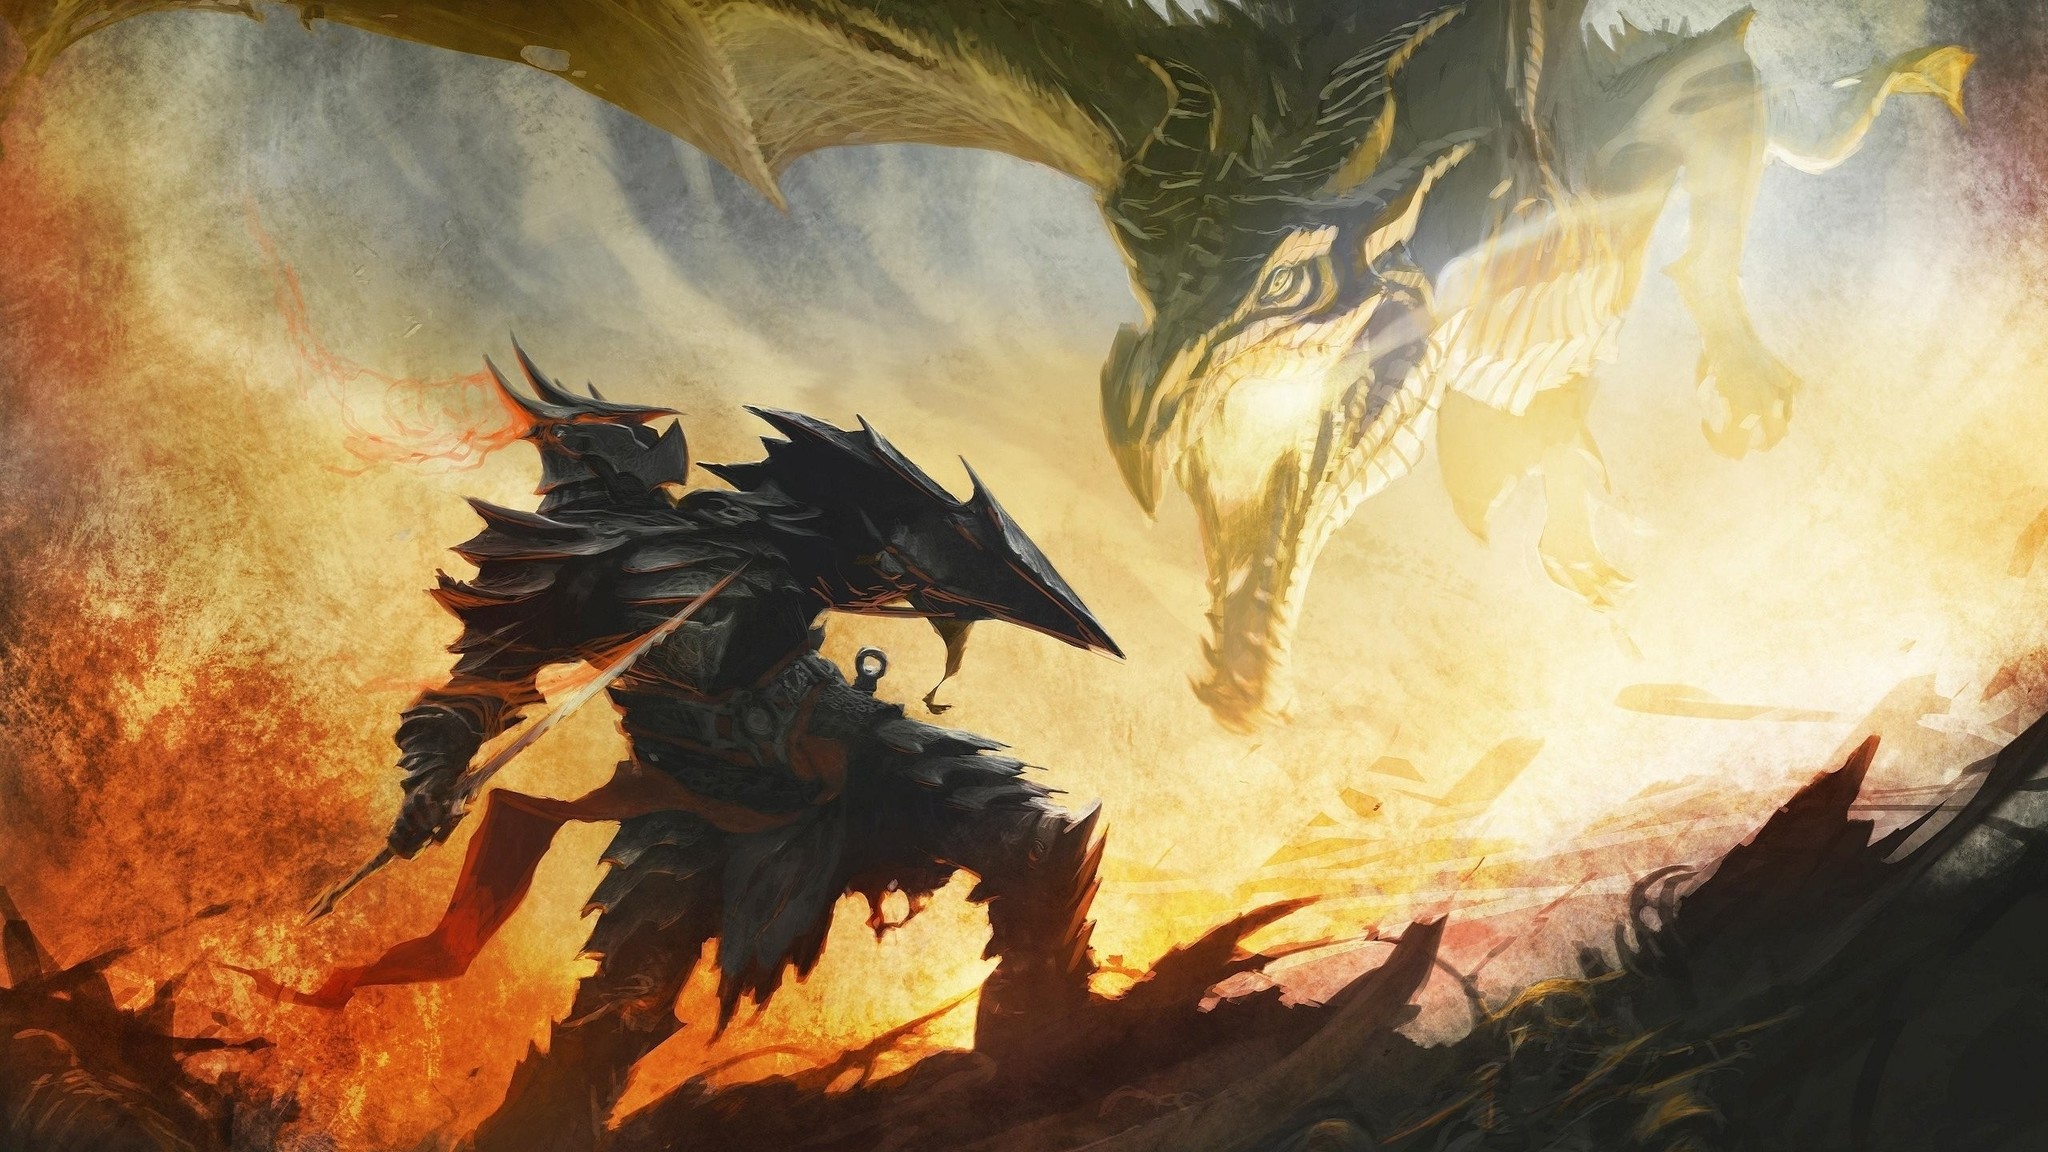 2048x1152 Description: Download Wings dragons fire fantasy art armor artwork warriors  swords the wallpaper/desktop background in  HD & Widescreen  resolution.